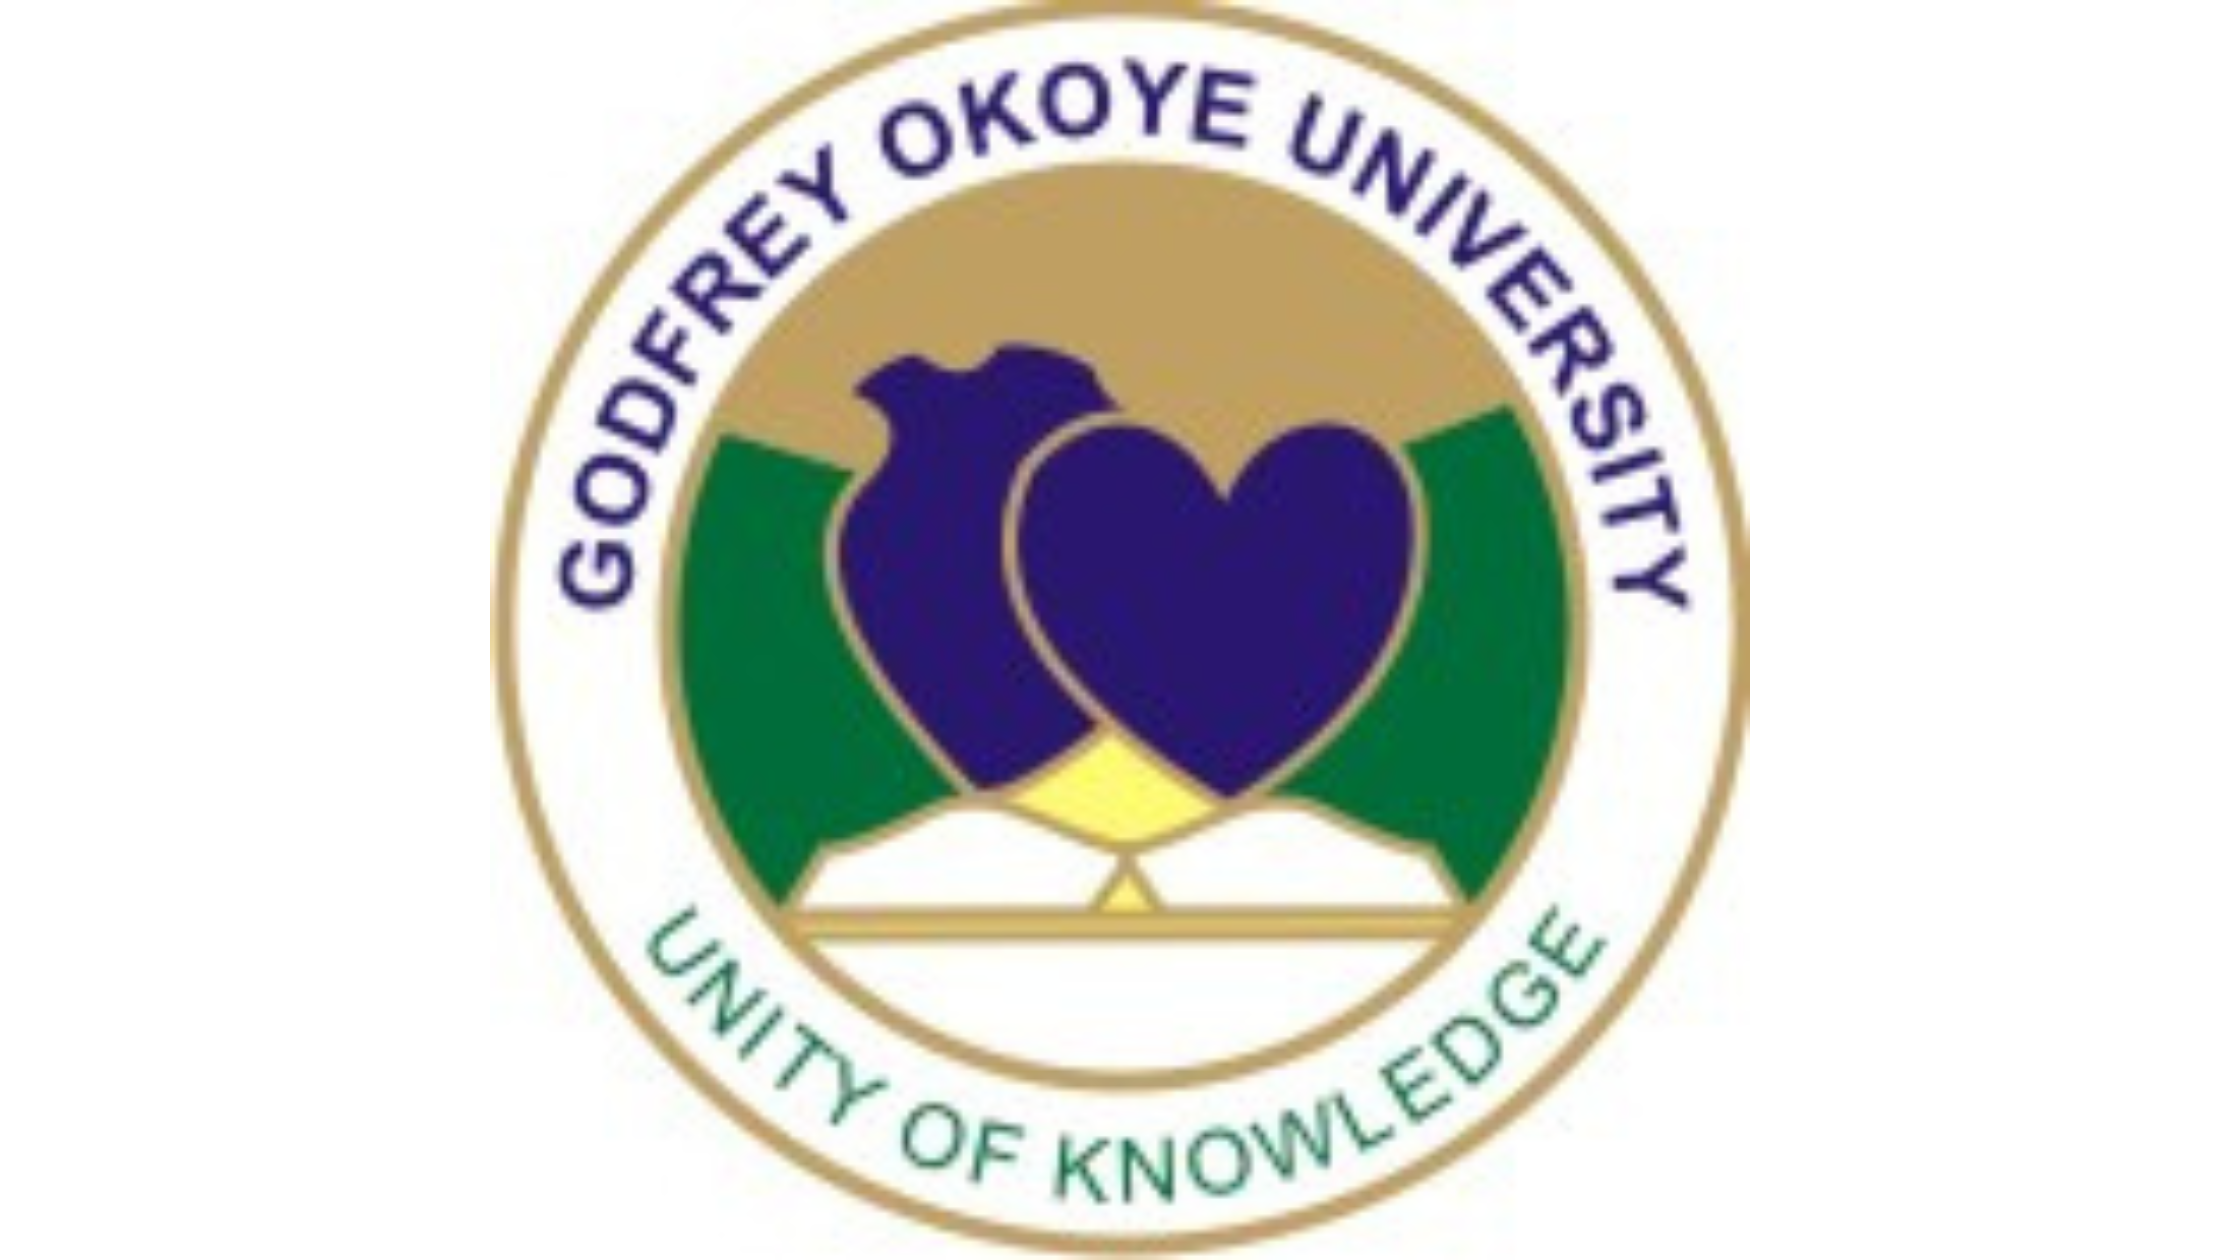 Godfrey Okoye University Post-UTME 2023: Eligibility Criteria, How to Apply, and Registration Details